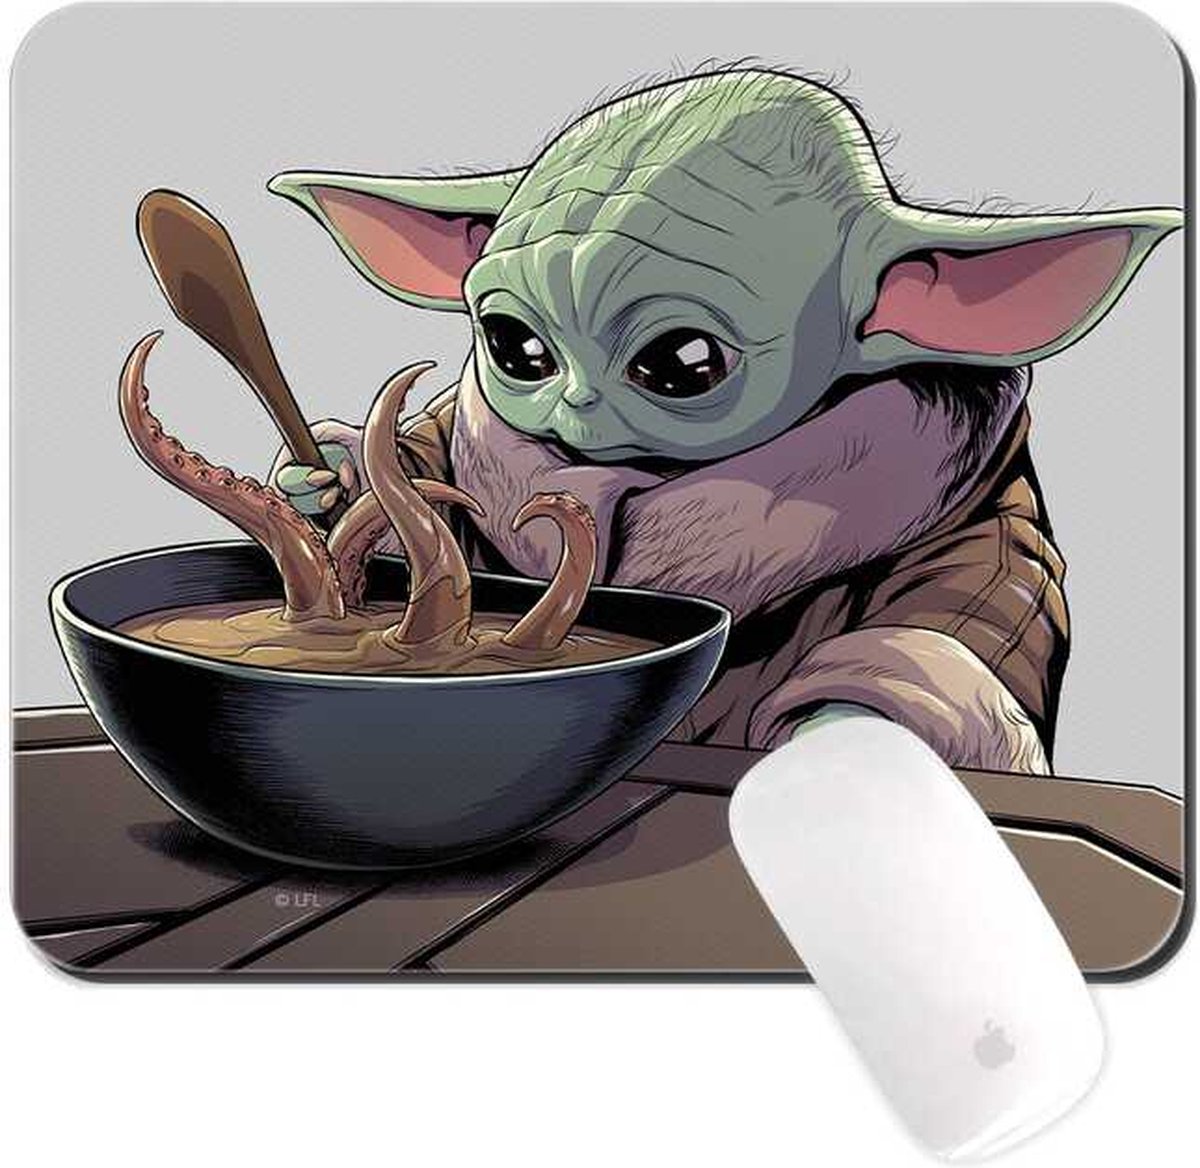 Disney Star Wars Baby Yoda - Muismat 22x18cm 3mm dik